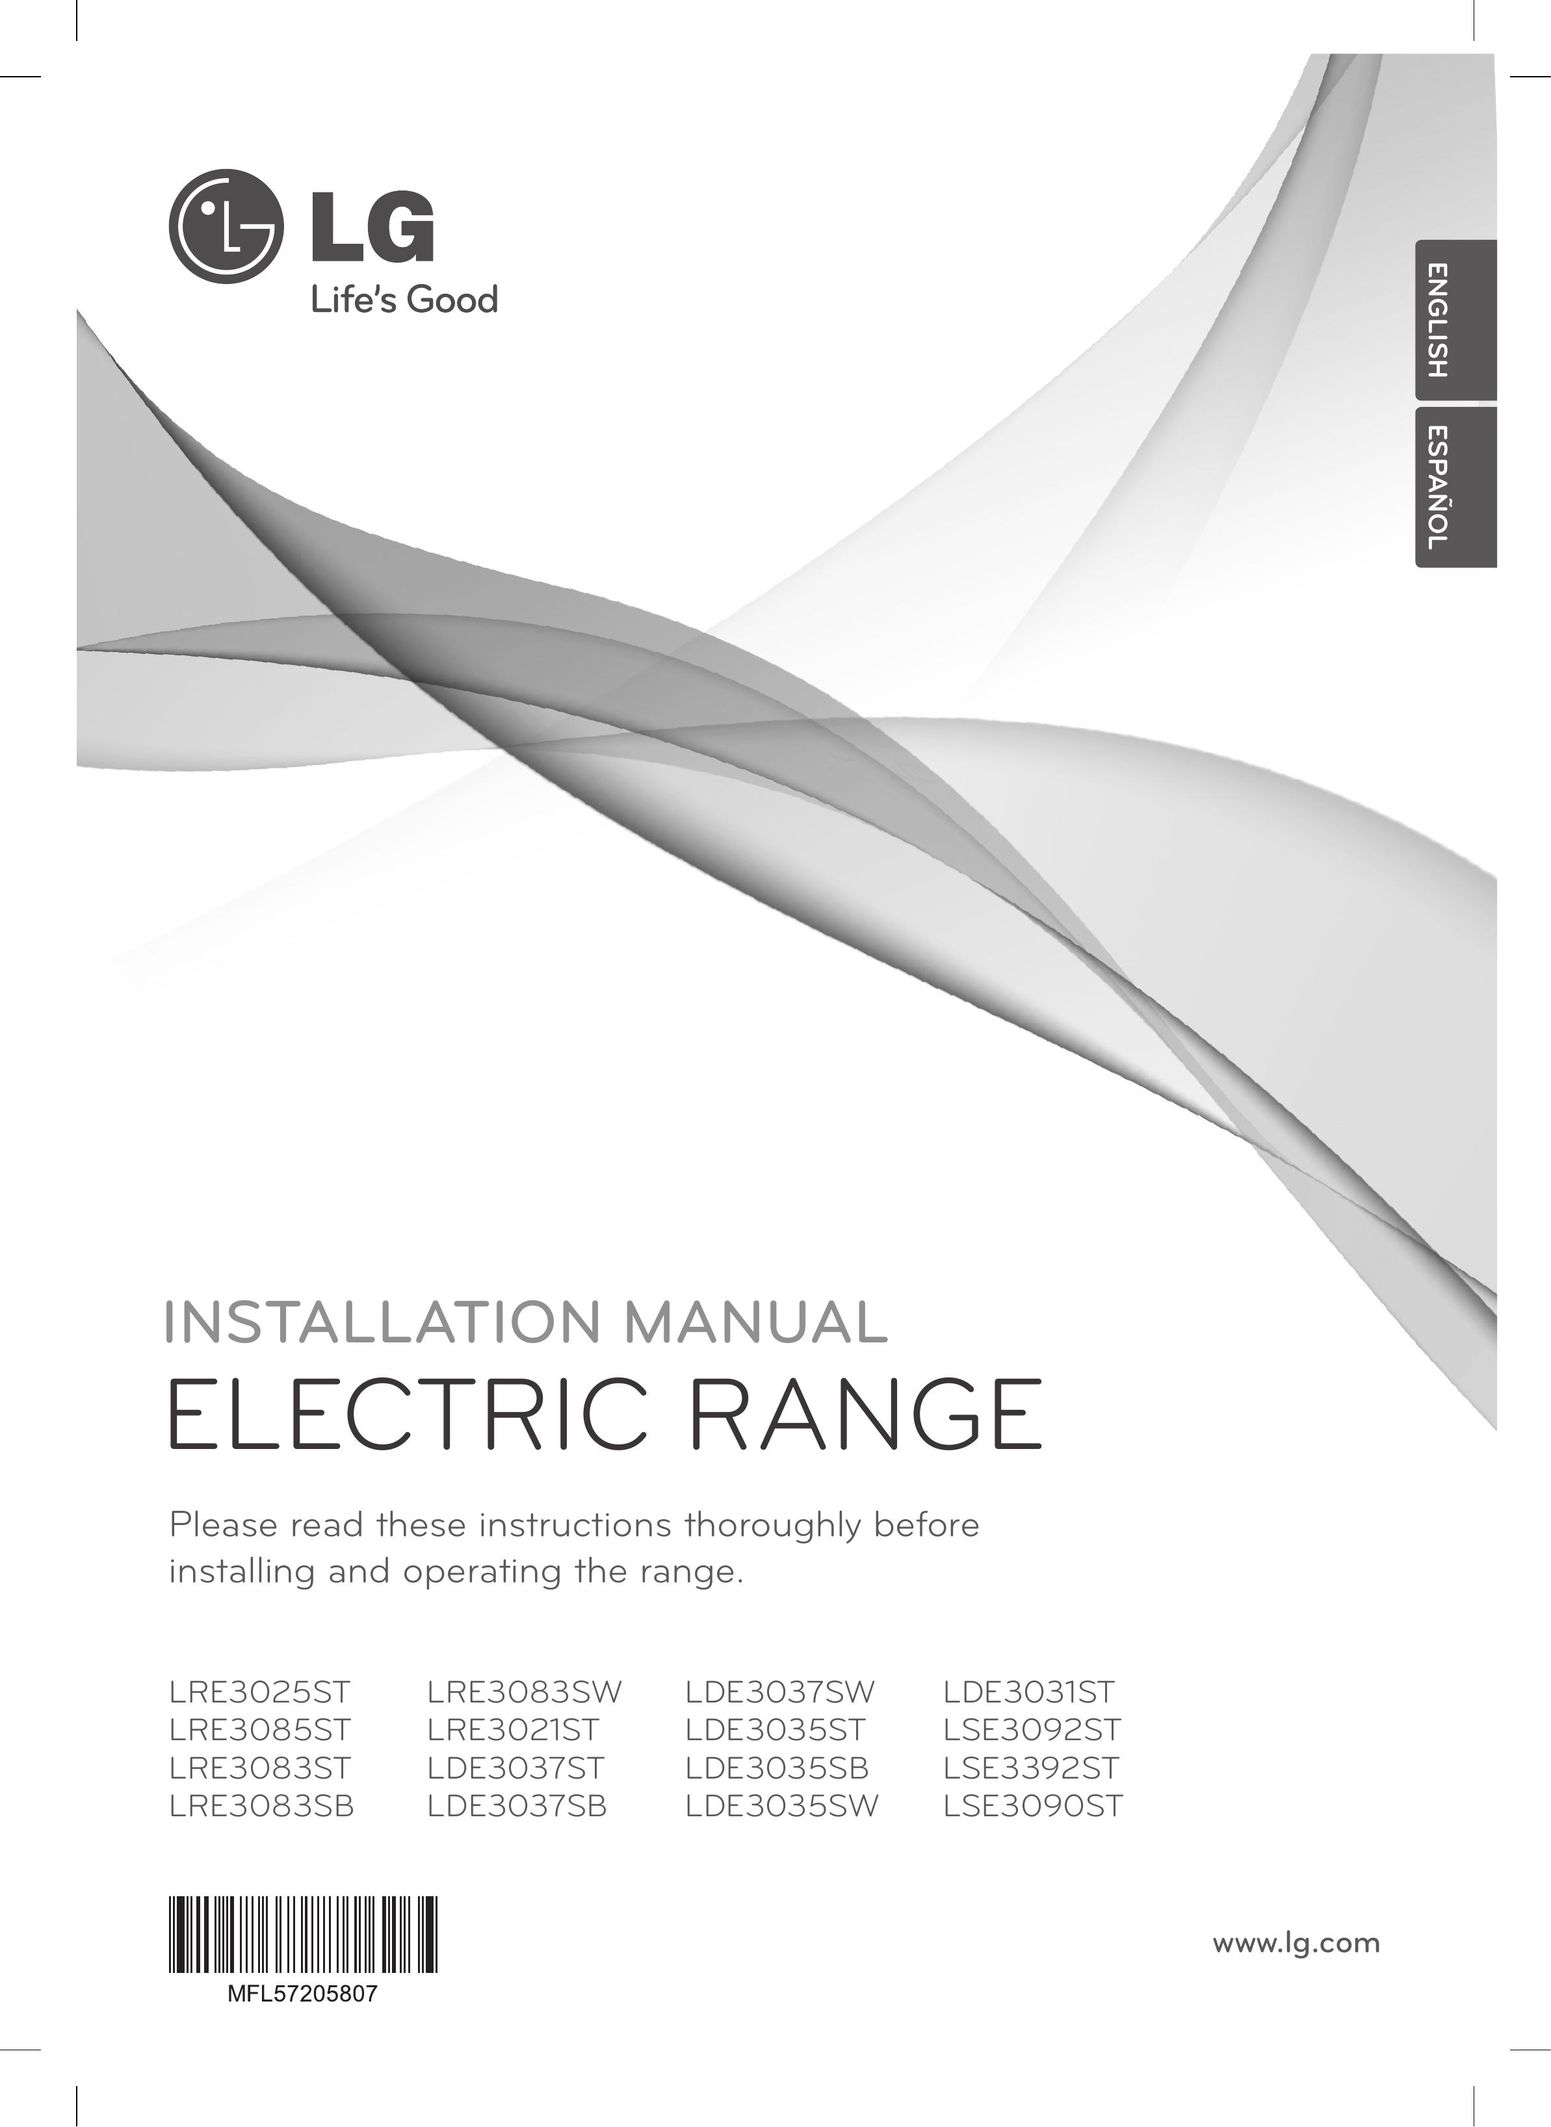 LG Electronics LDE3037SB Range User Manual